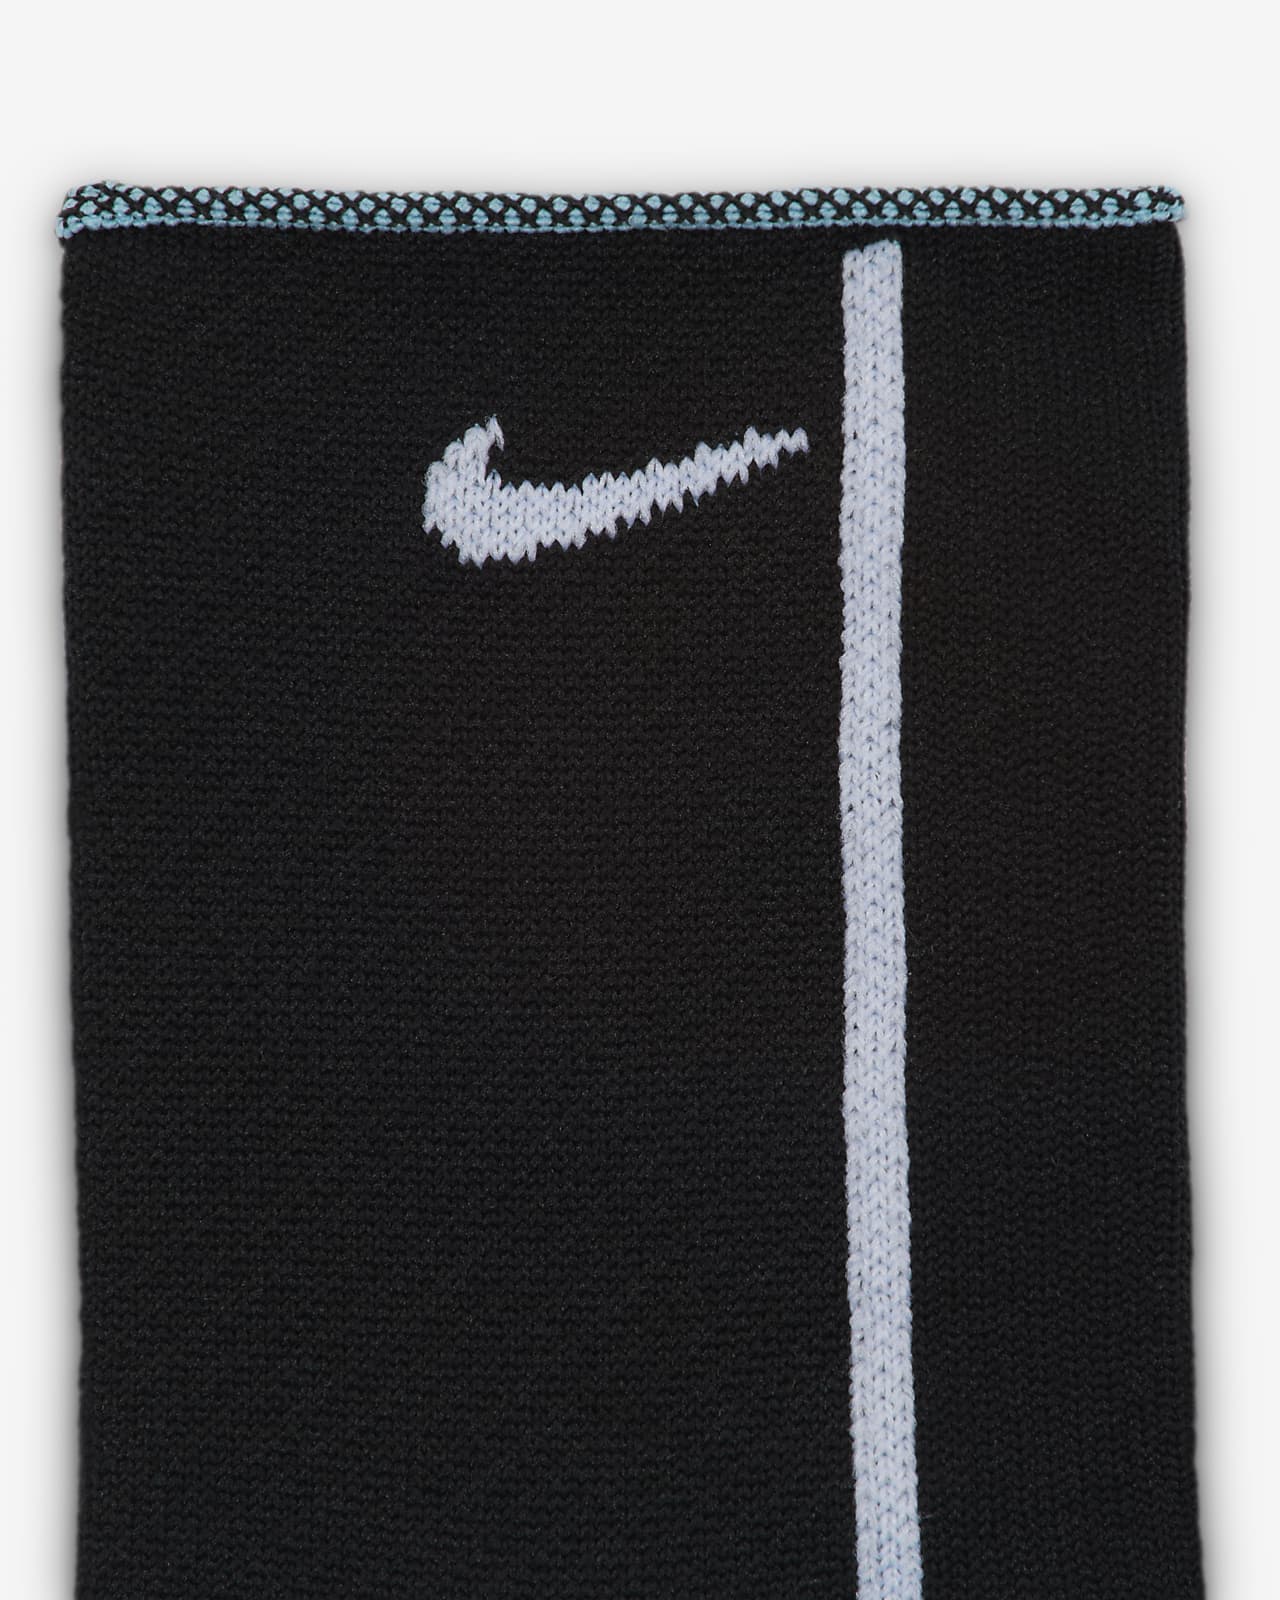 Nike Everyday Women's Training Ankle Socks.